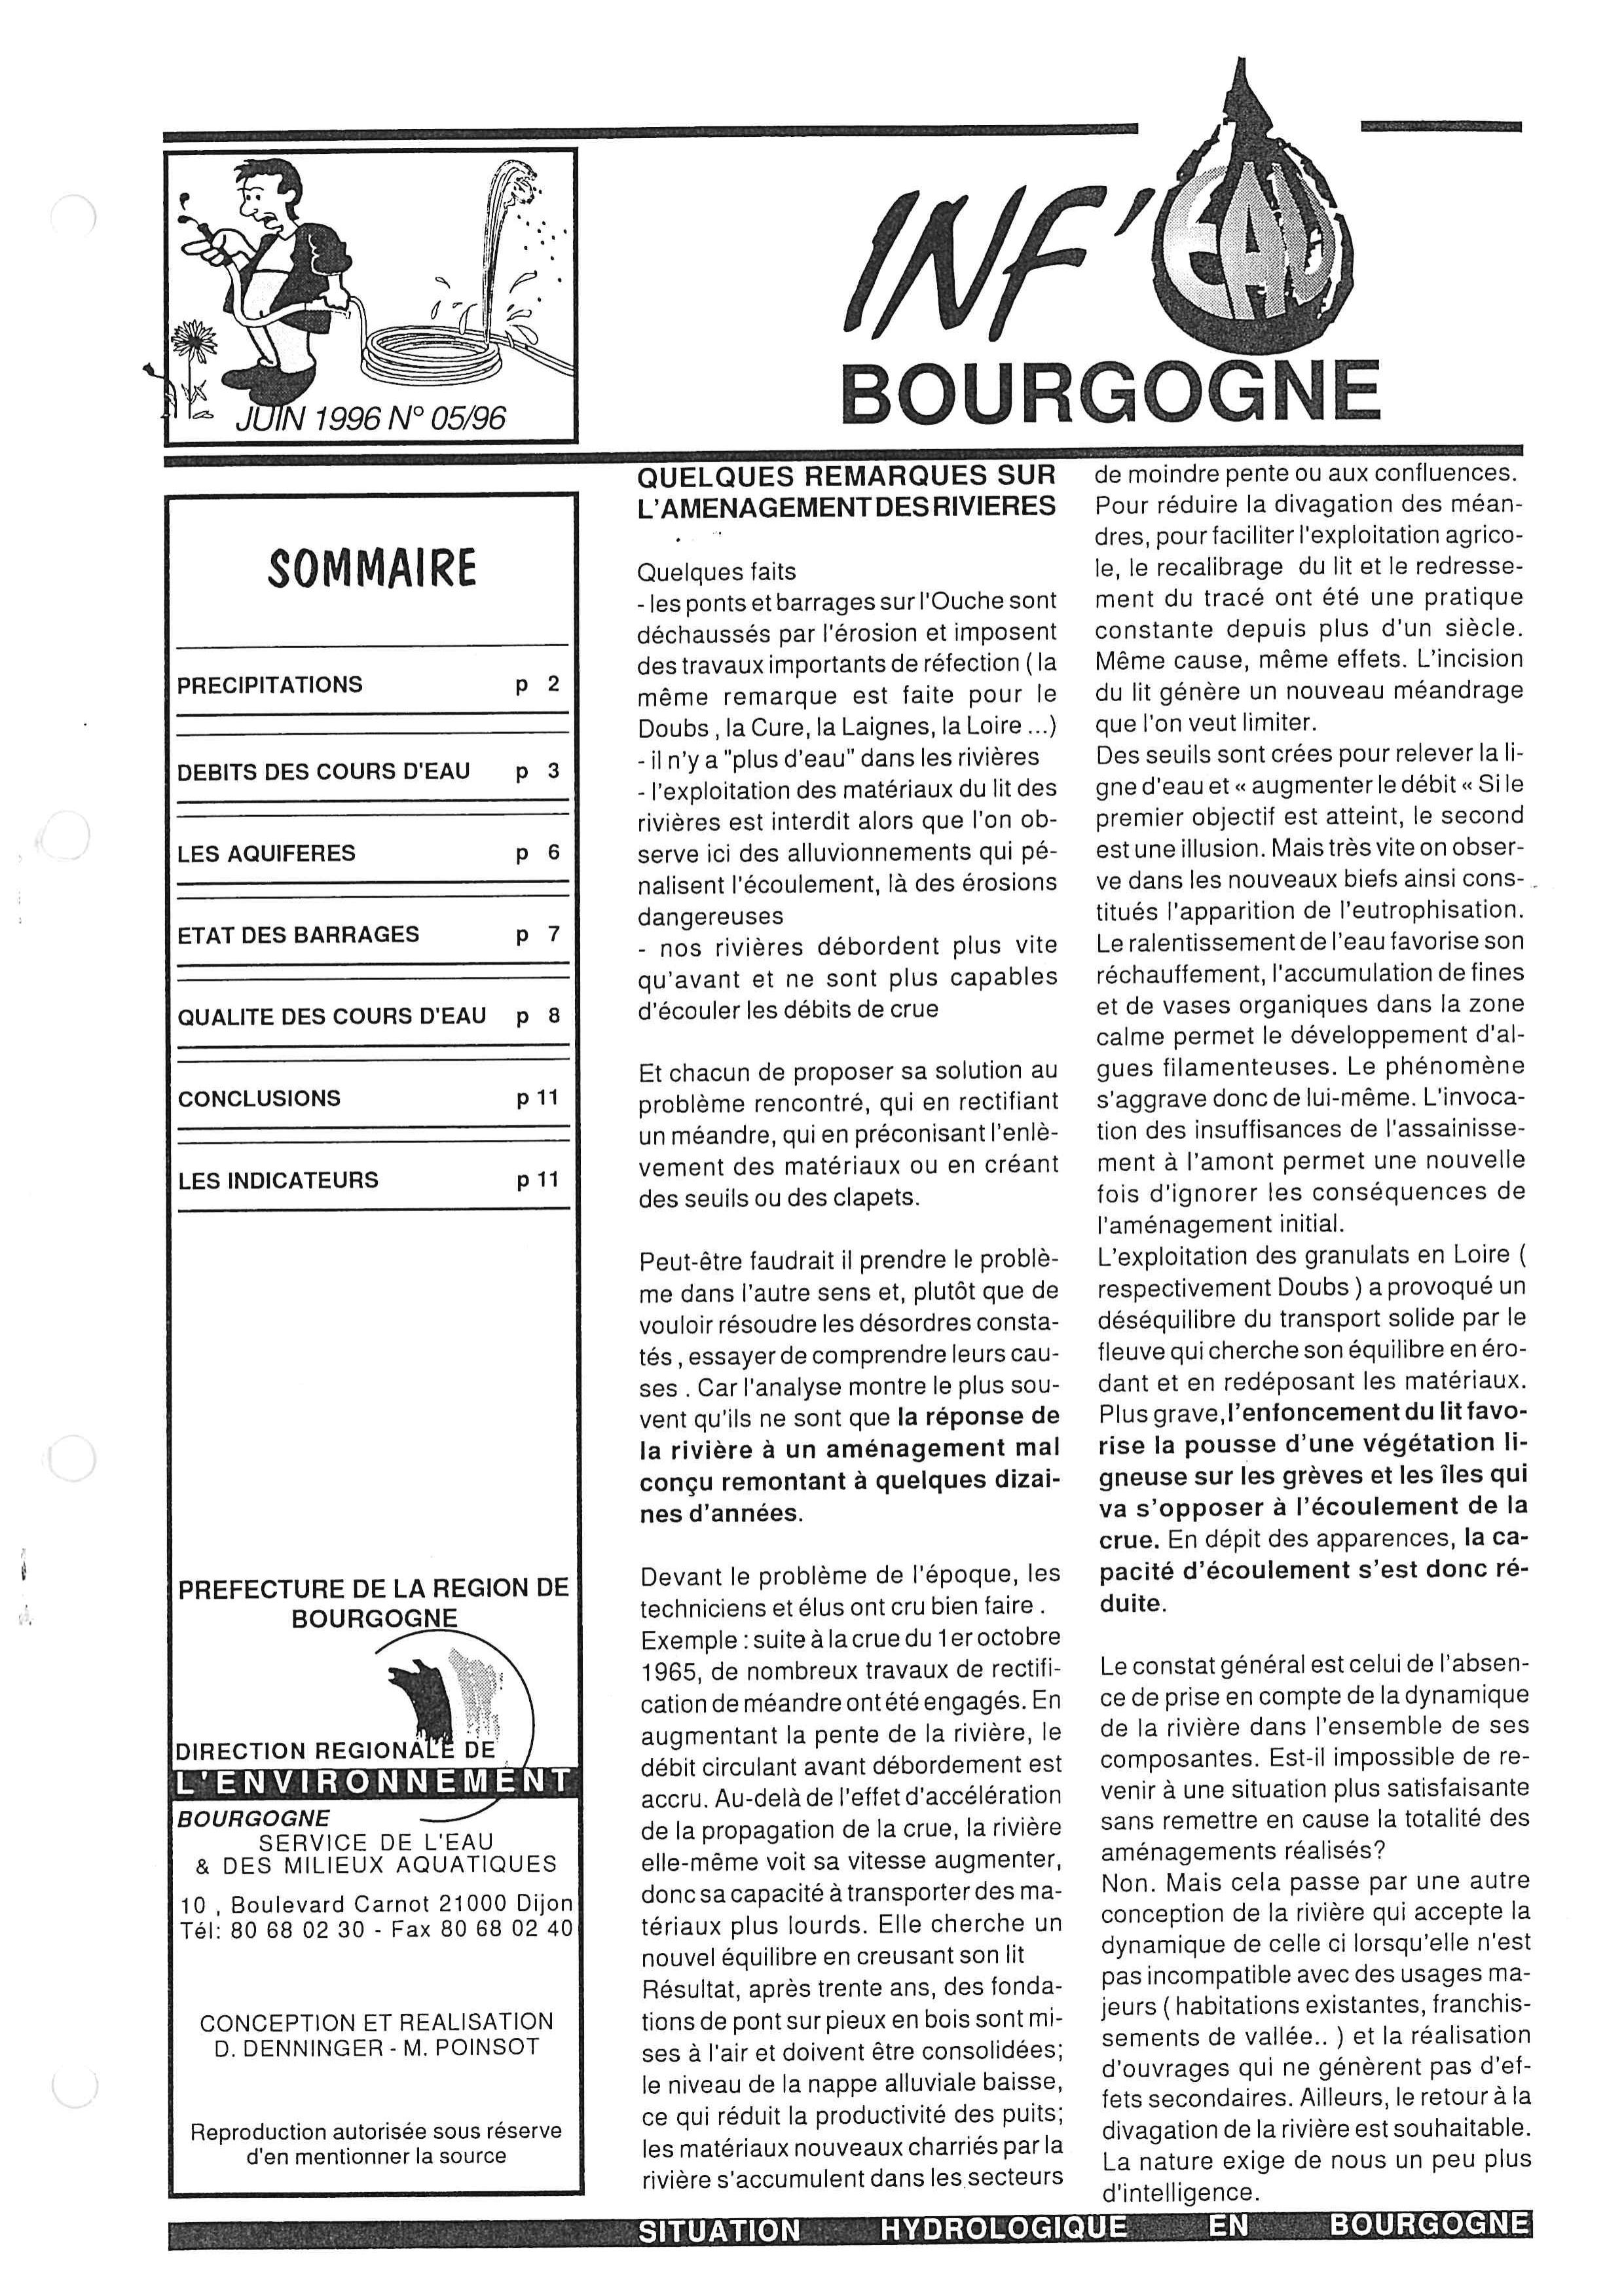 Bulletin hydrologique du mois de mai 1996